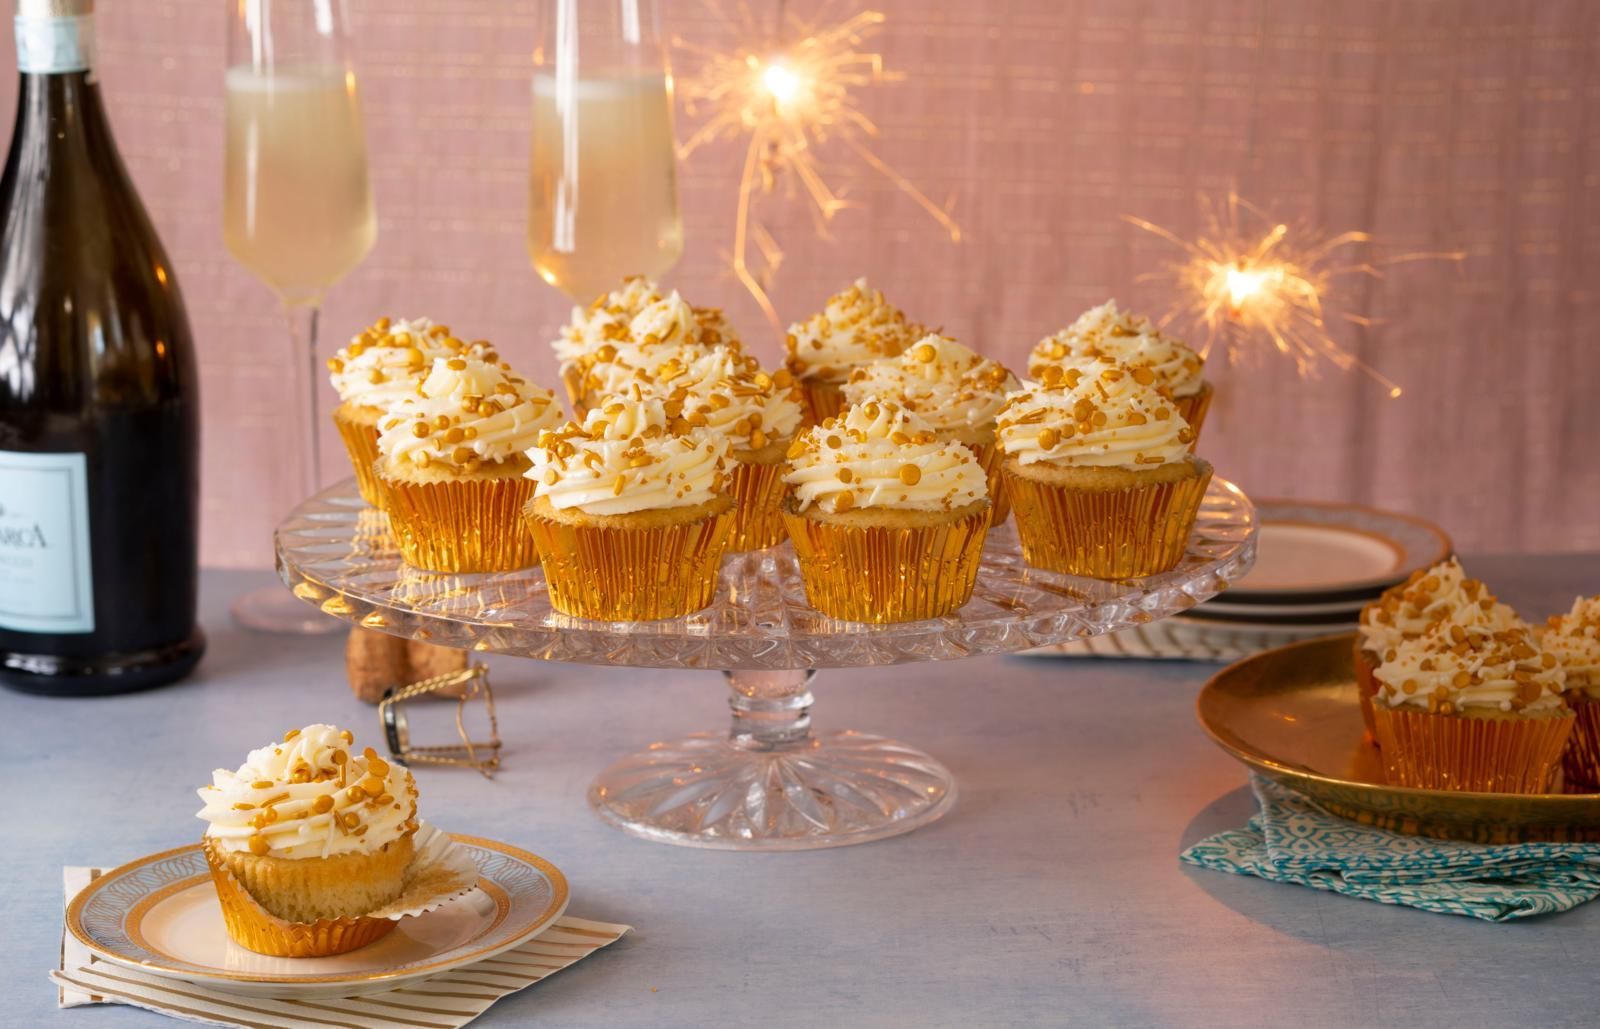 25 Amazing Rustic Wedding Cupcake & Stands 🧁